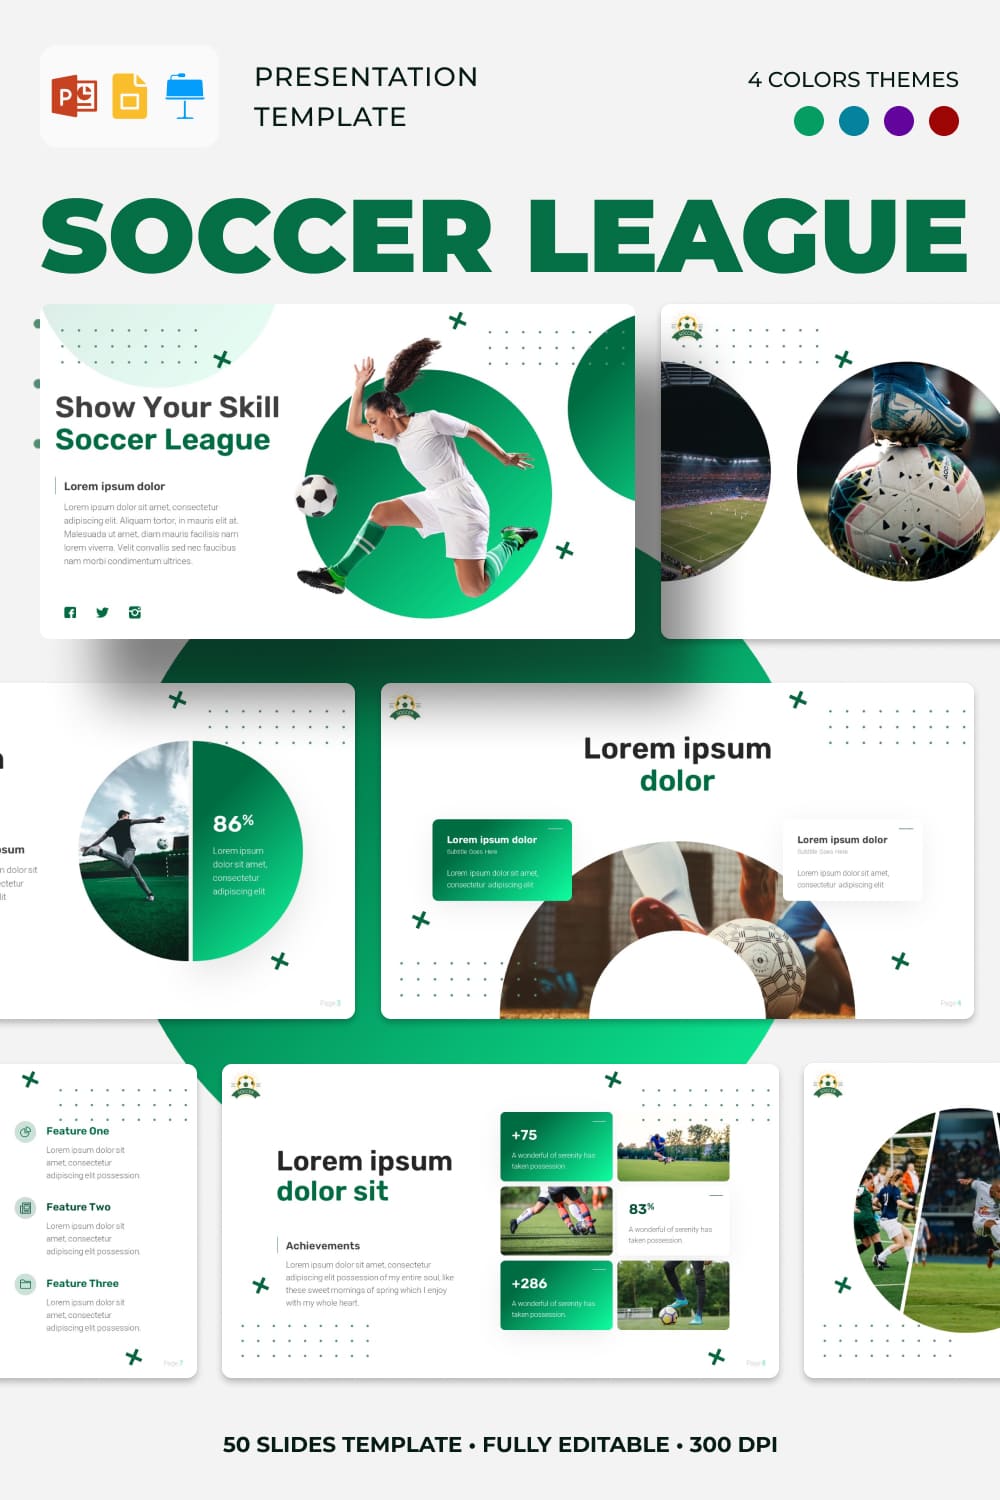 Soccer League Presentation Template - Pinterest.